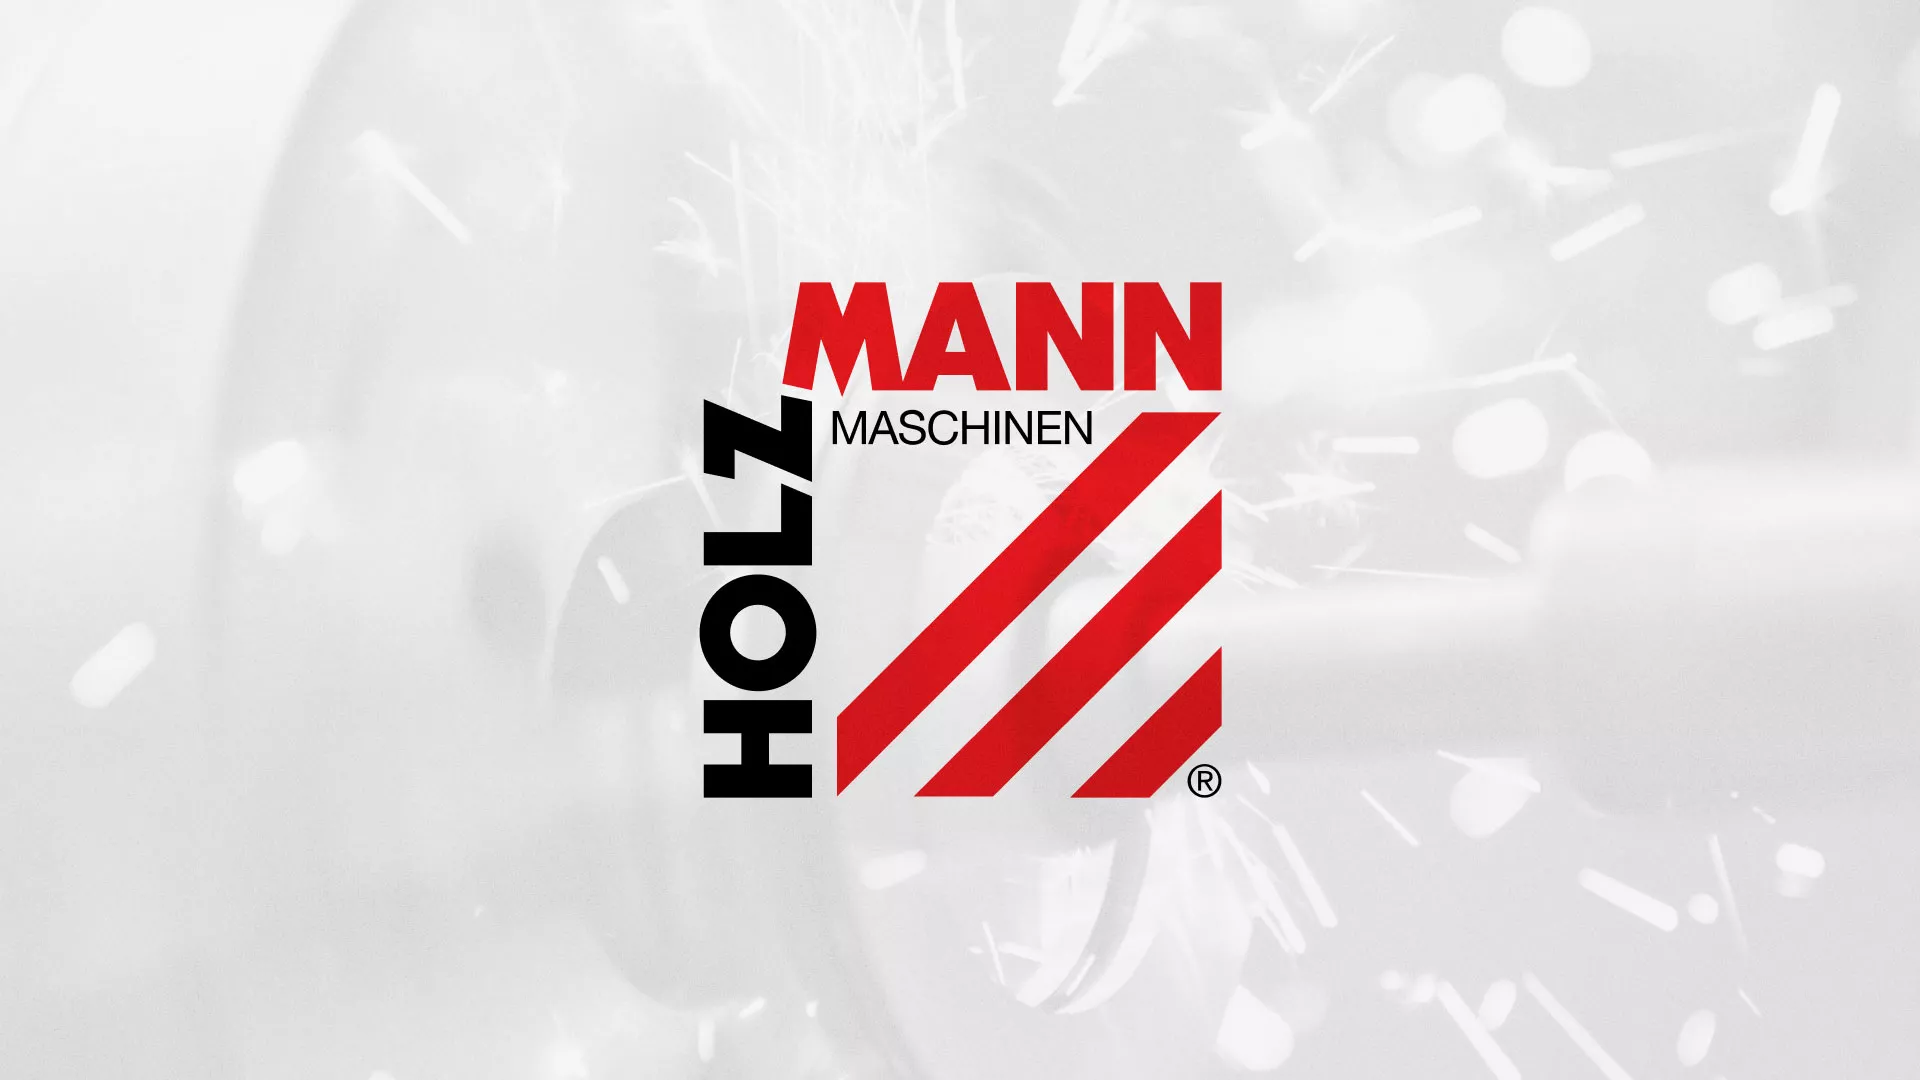 Создание сайта компании «HOLZMANN Maschinen GmbH» в Карабаше